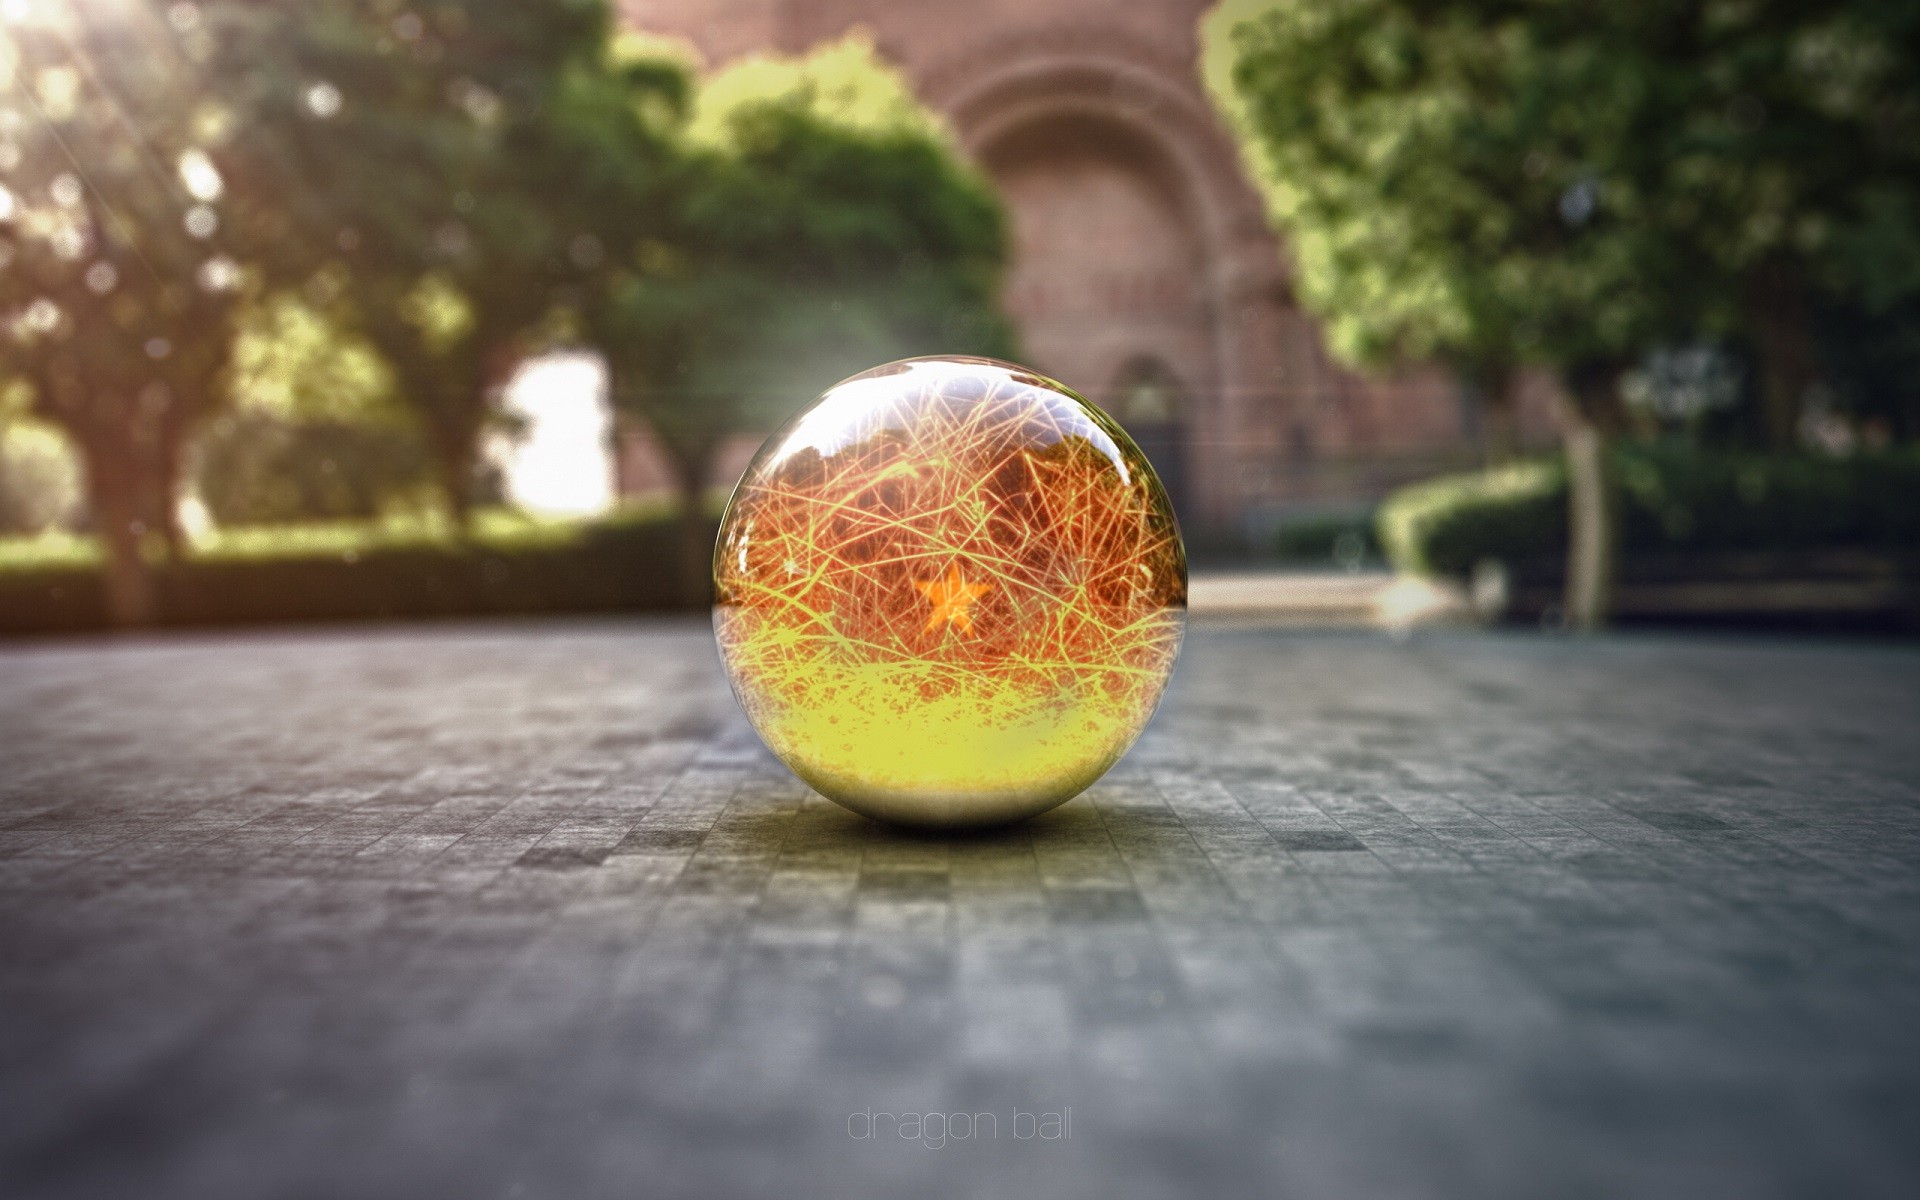 Dragon Ball, Digital Art, Marble, Sphere Wallpaper